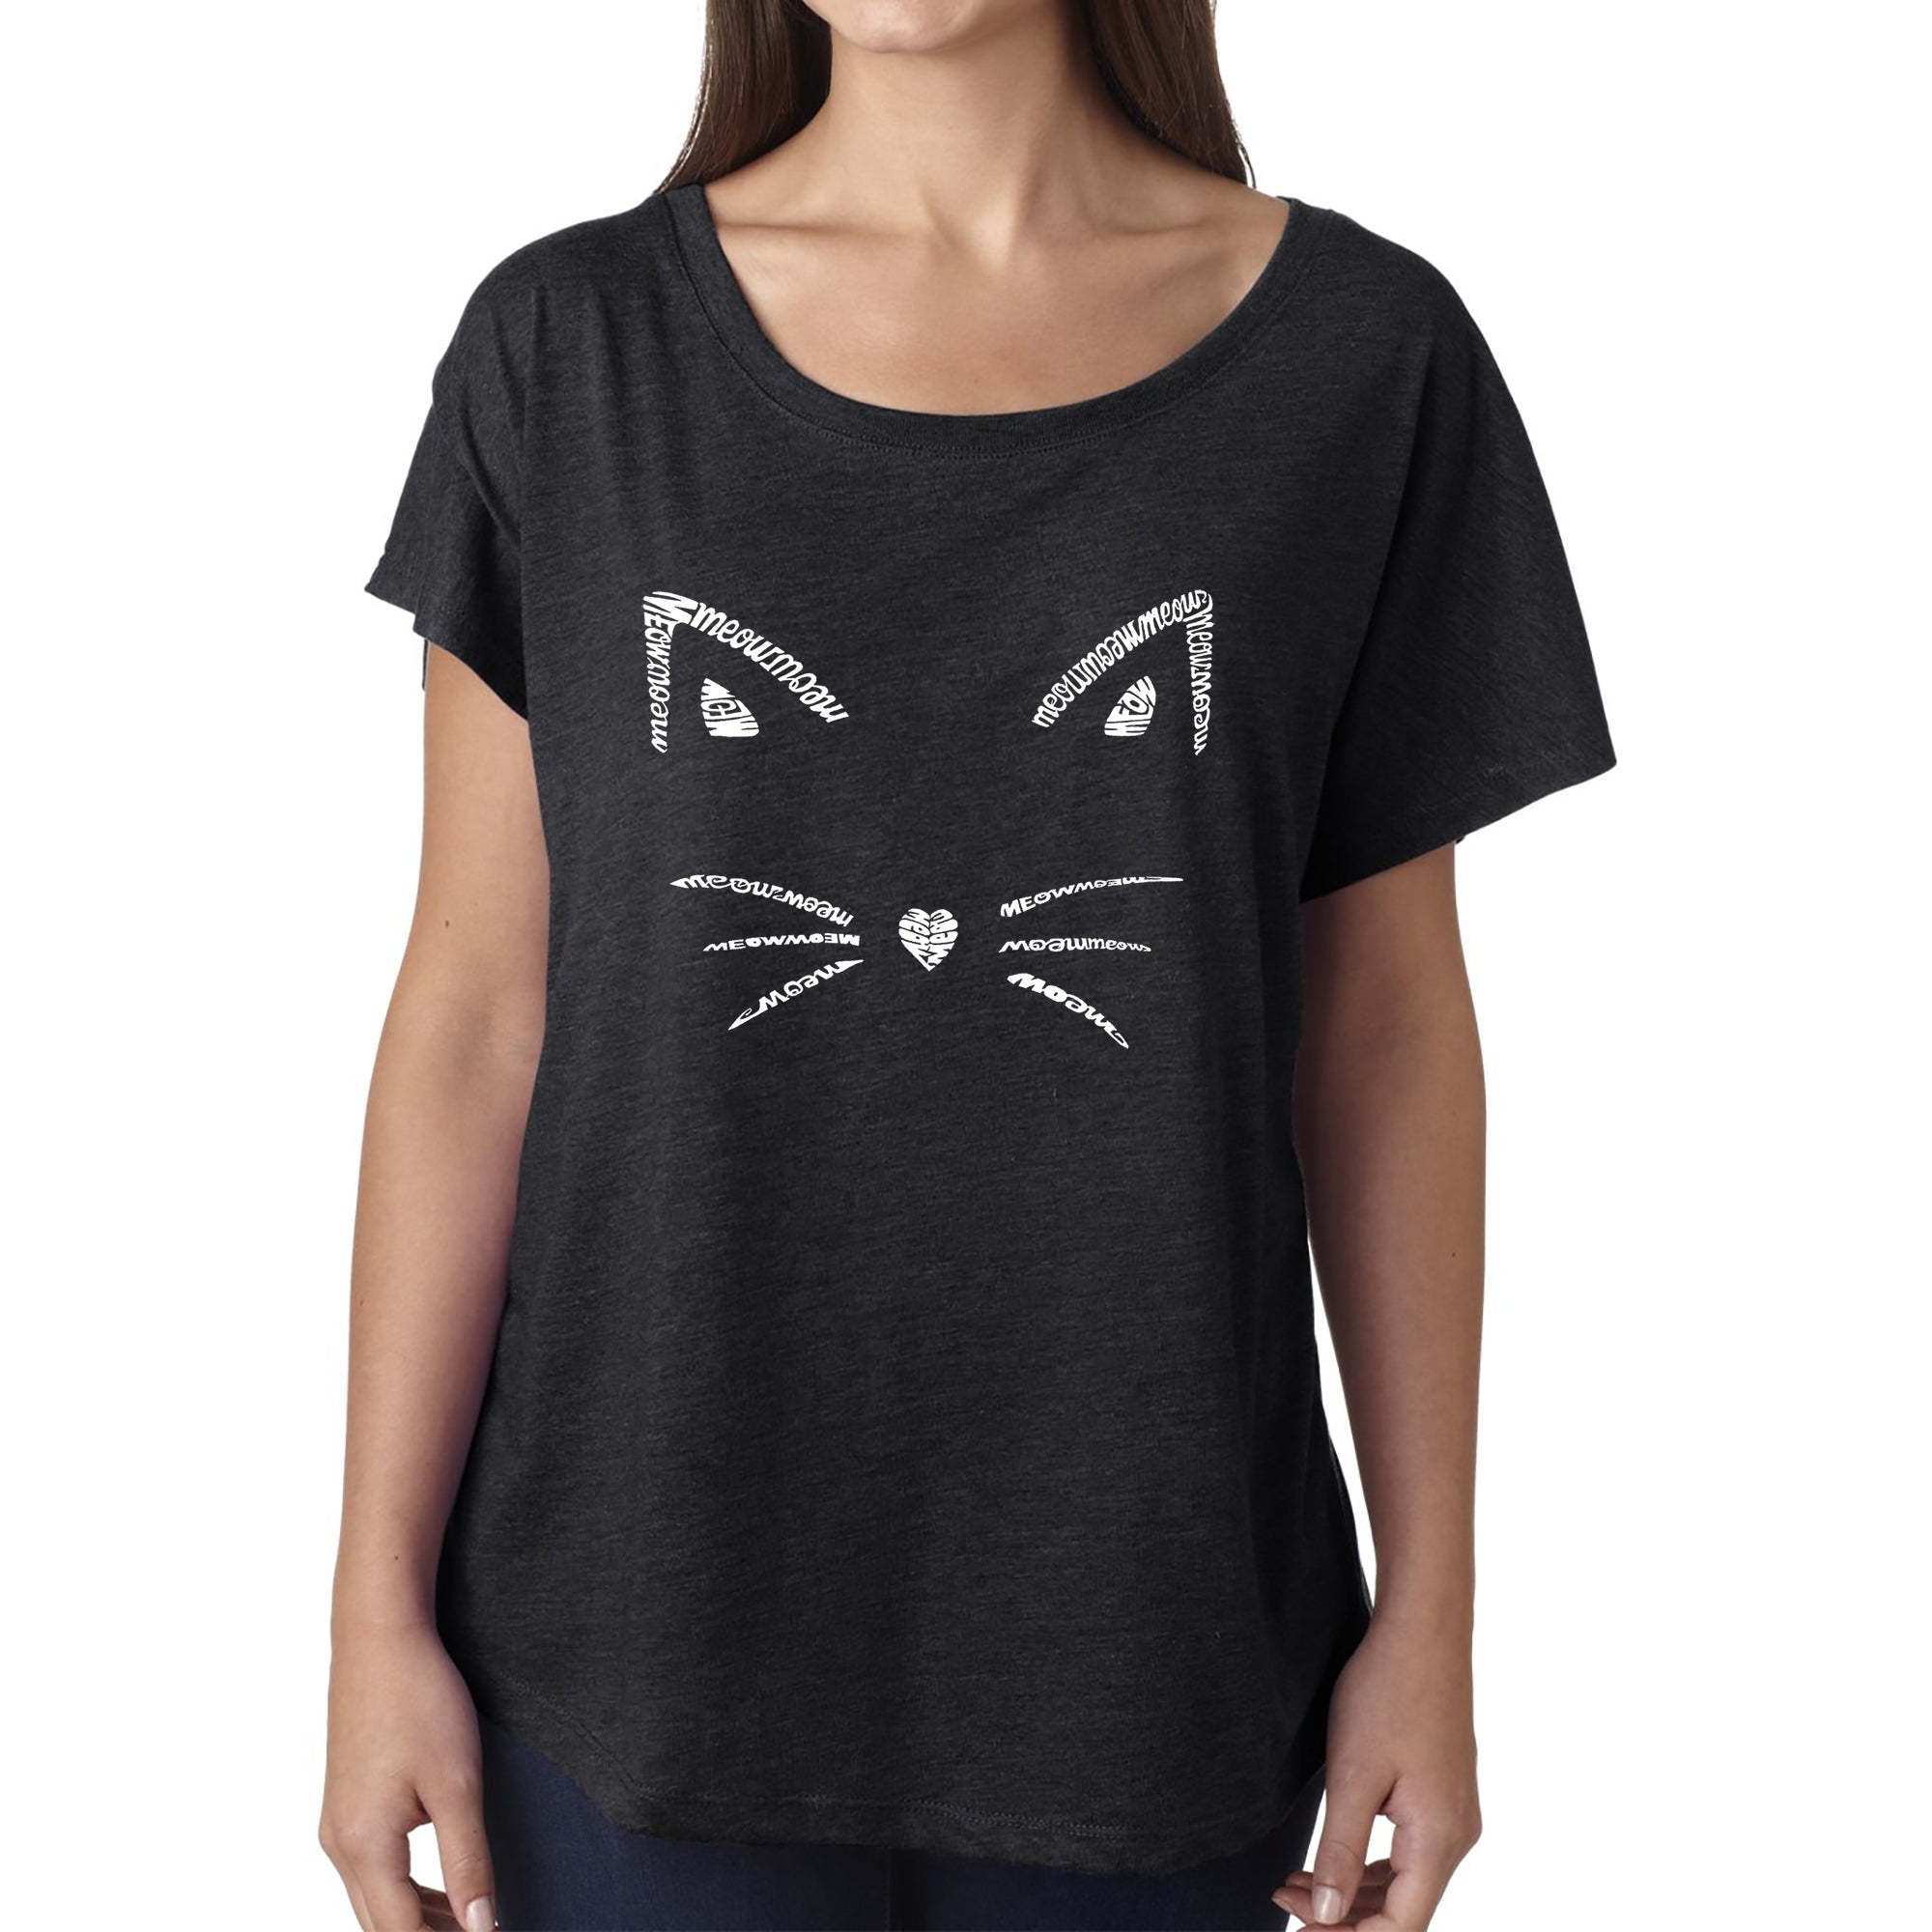 Whiskers - Women's Loose Fit Dolman Cut Word Art Shirt - Black - X-Large